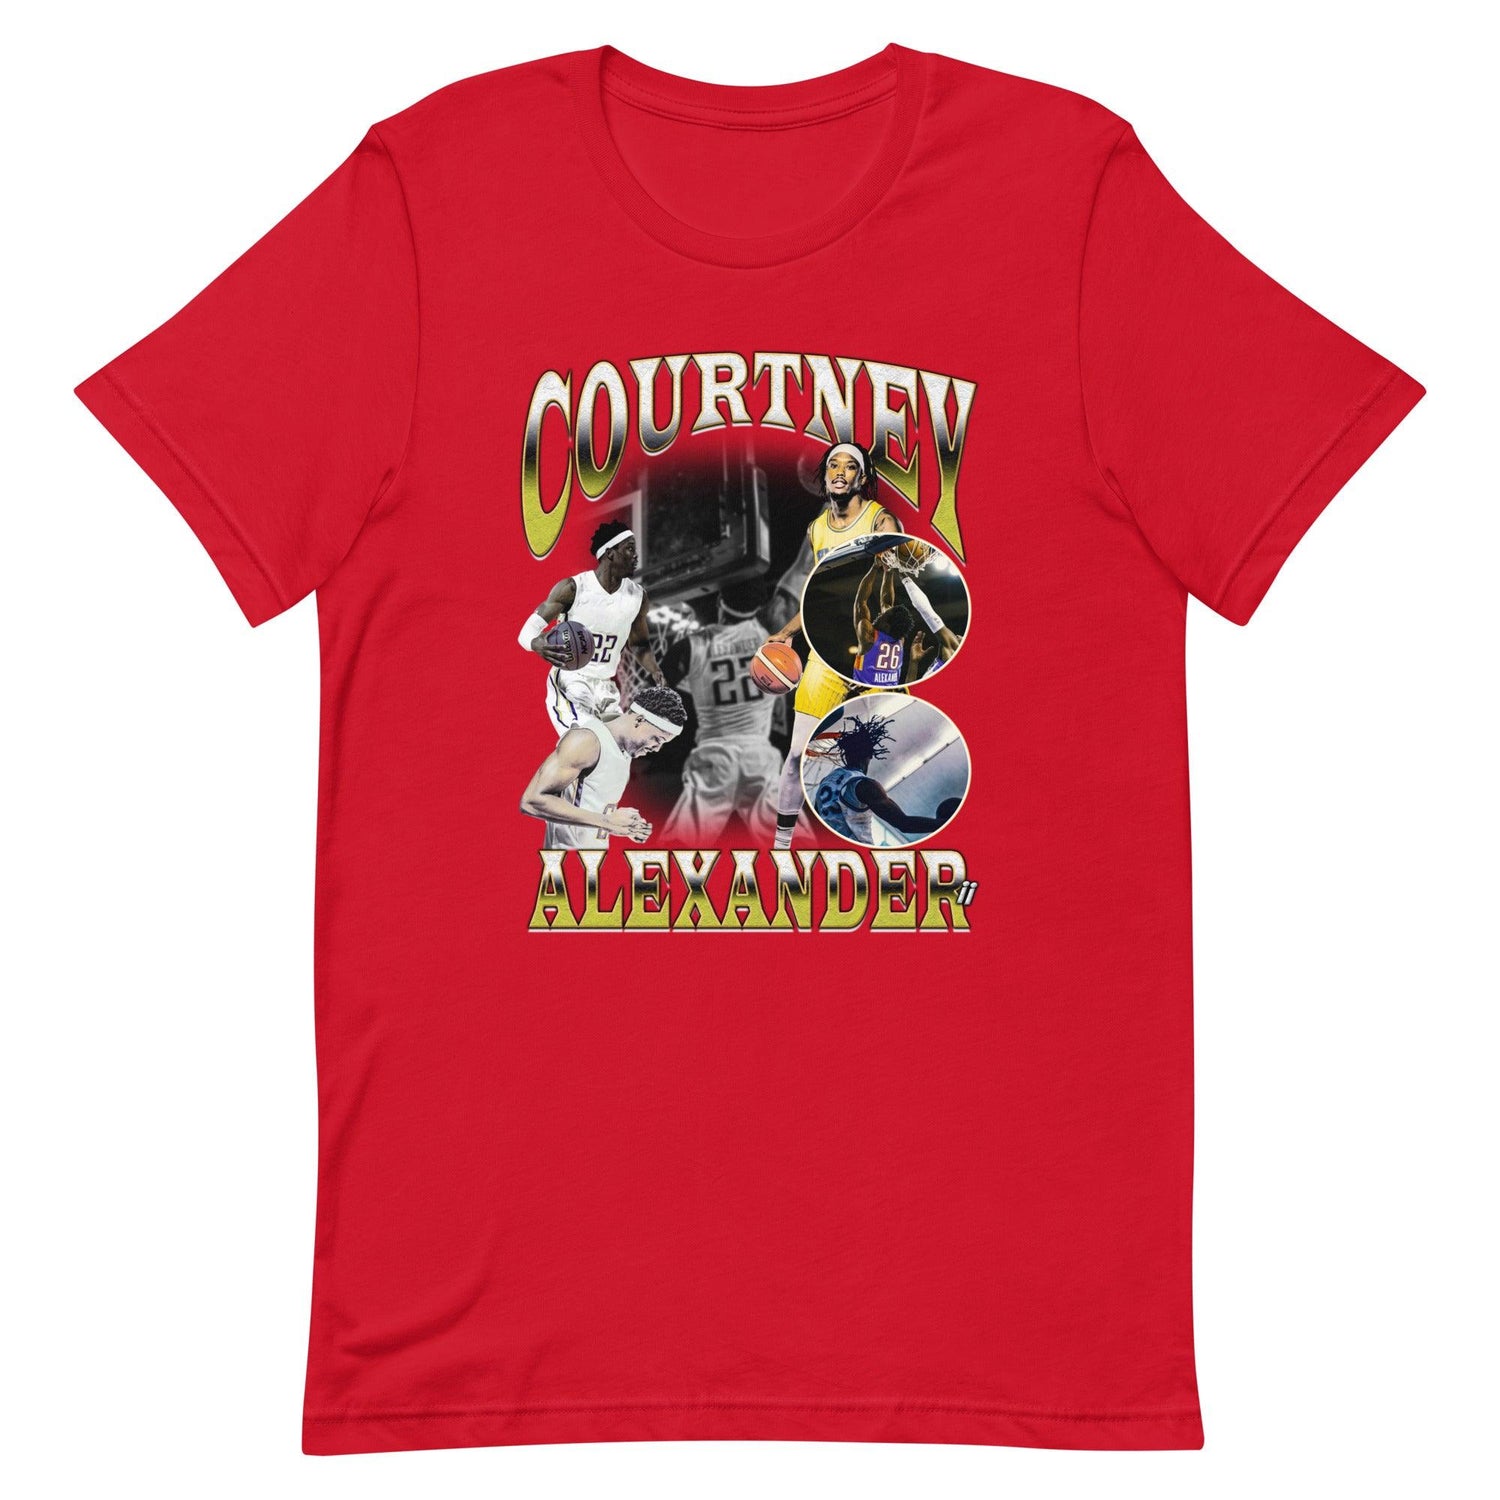 Courtney Alexander "Vintage" t-shirt - Fan Arch